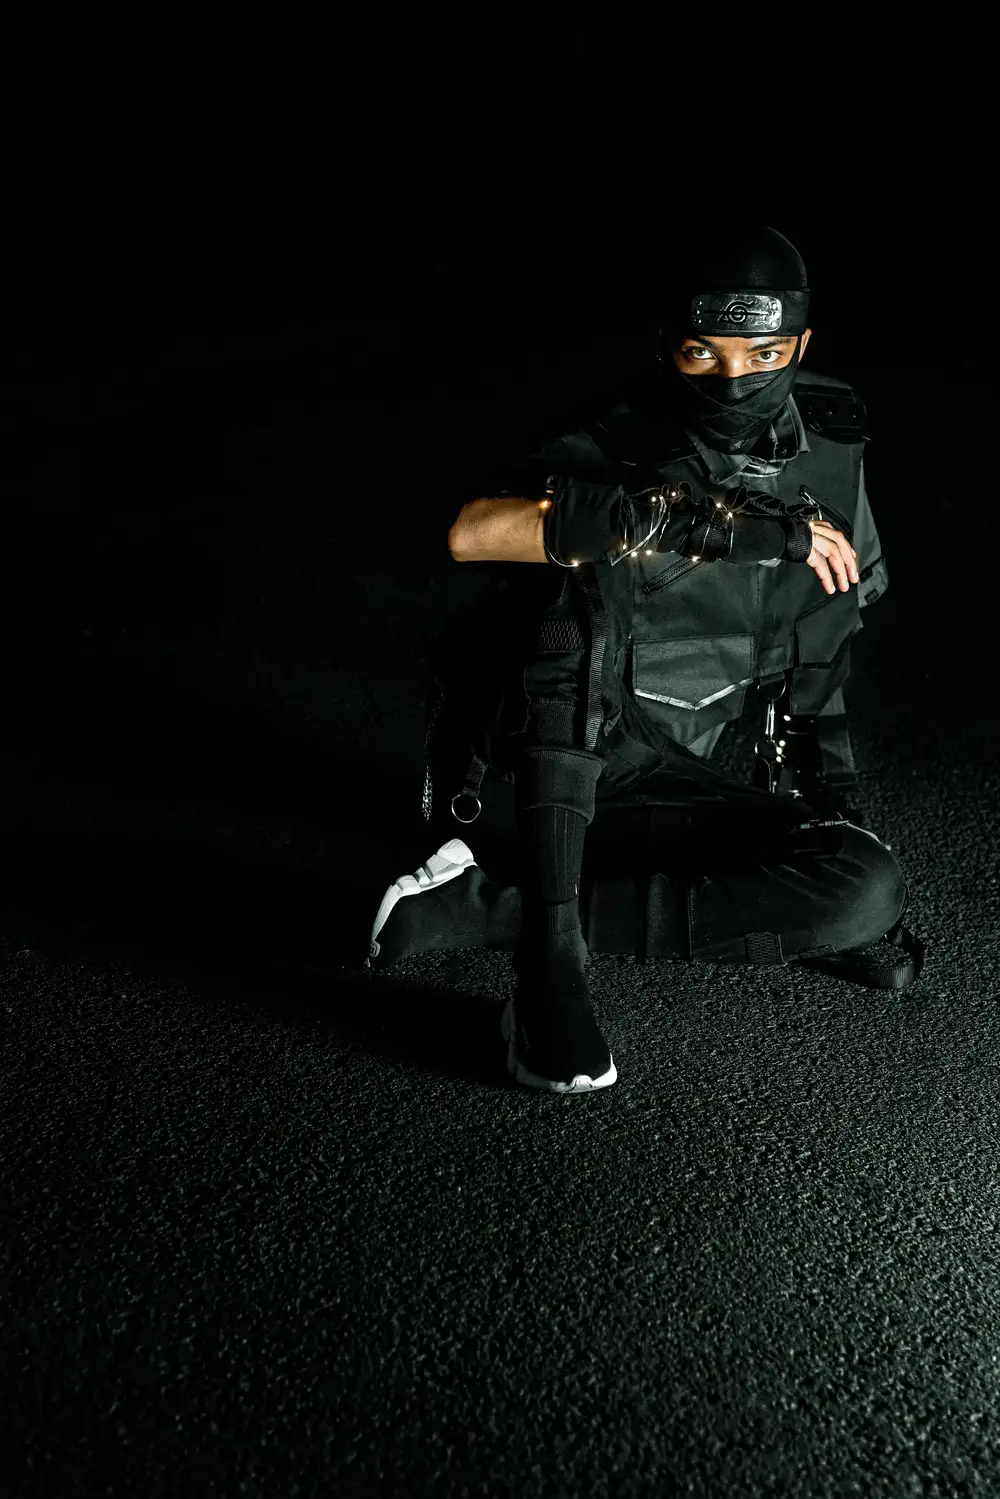 ninja sitting on the floor